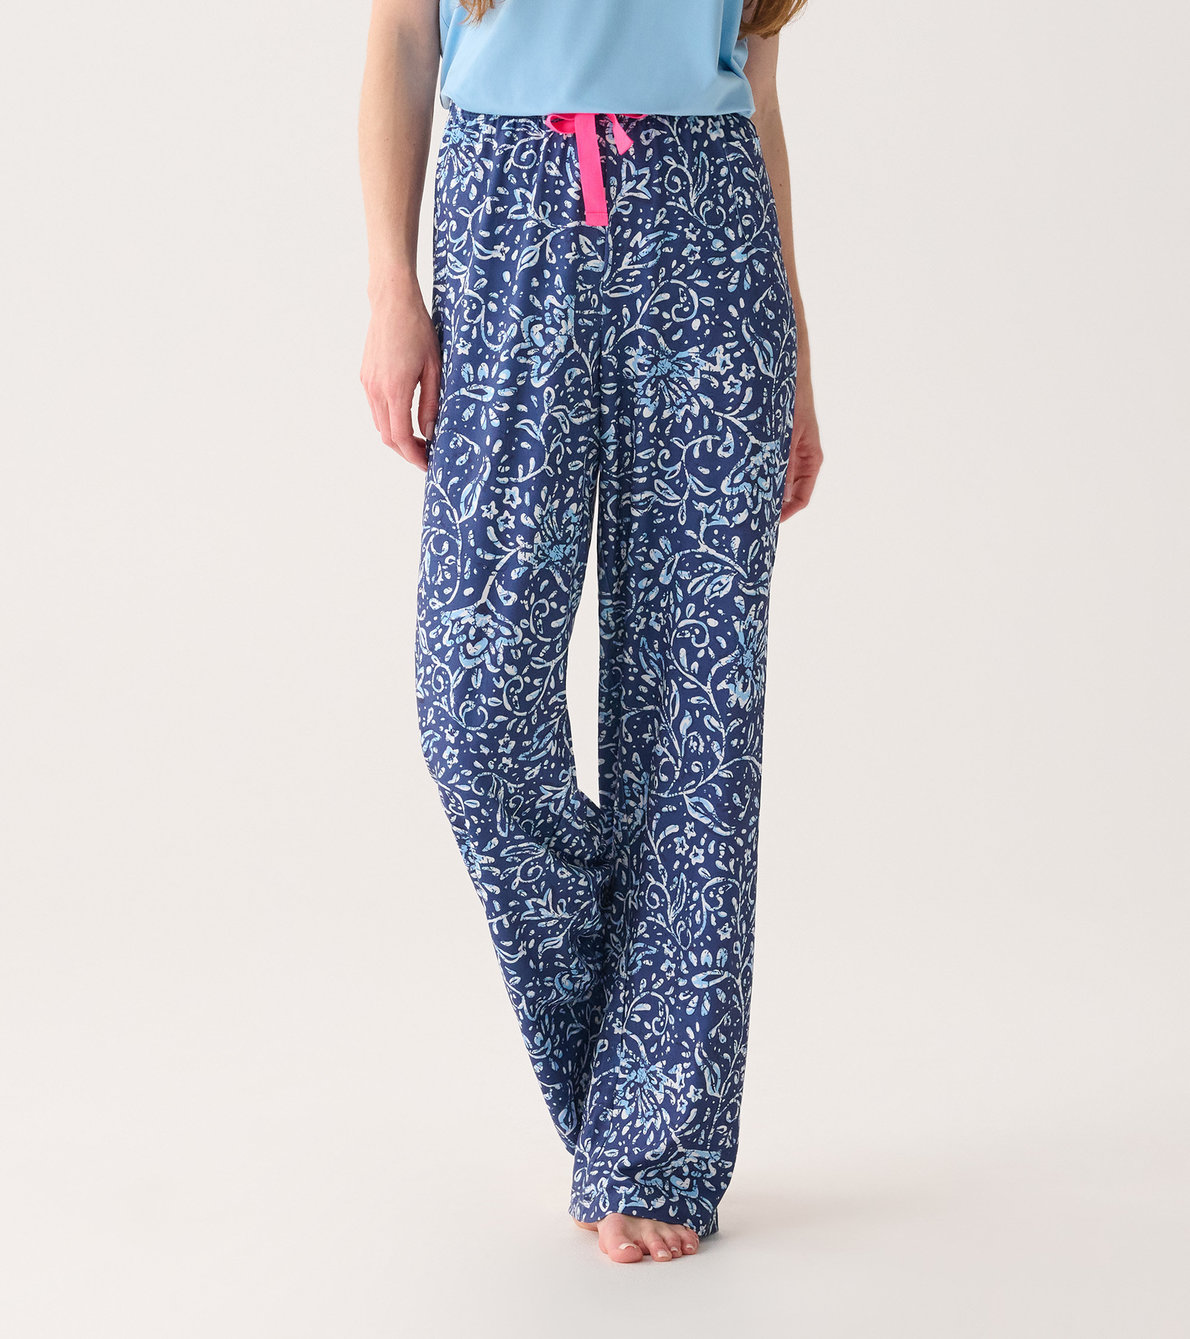 View larger image of Capelton Road Women's Batik Flowers Pajama Pants